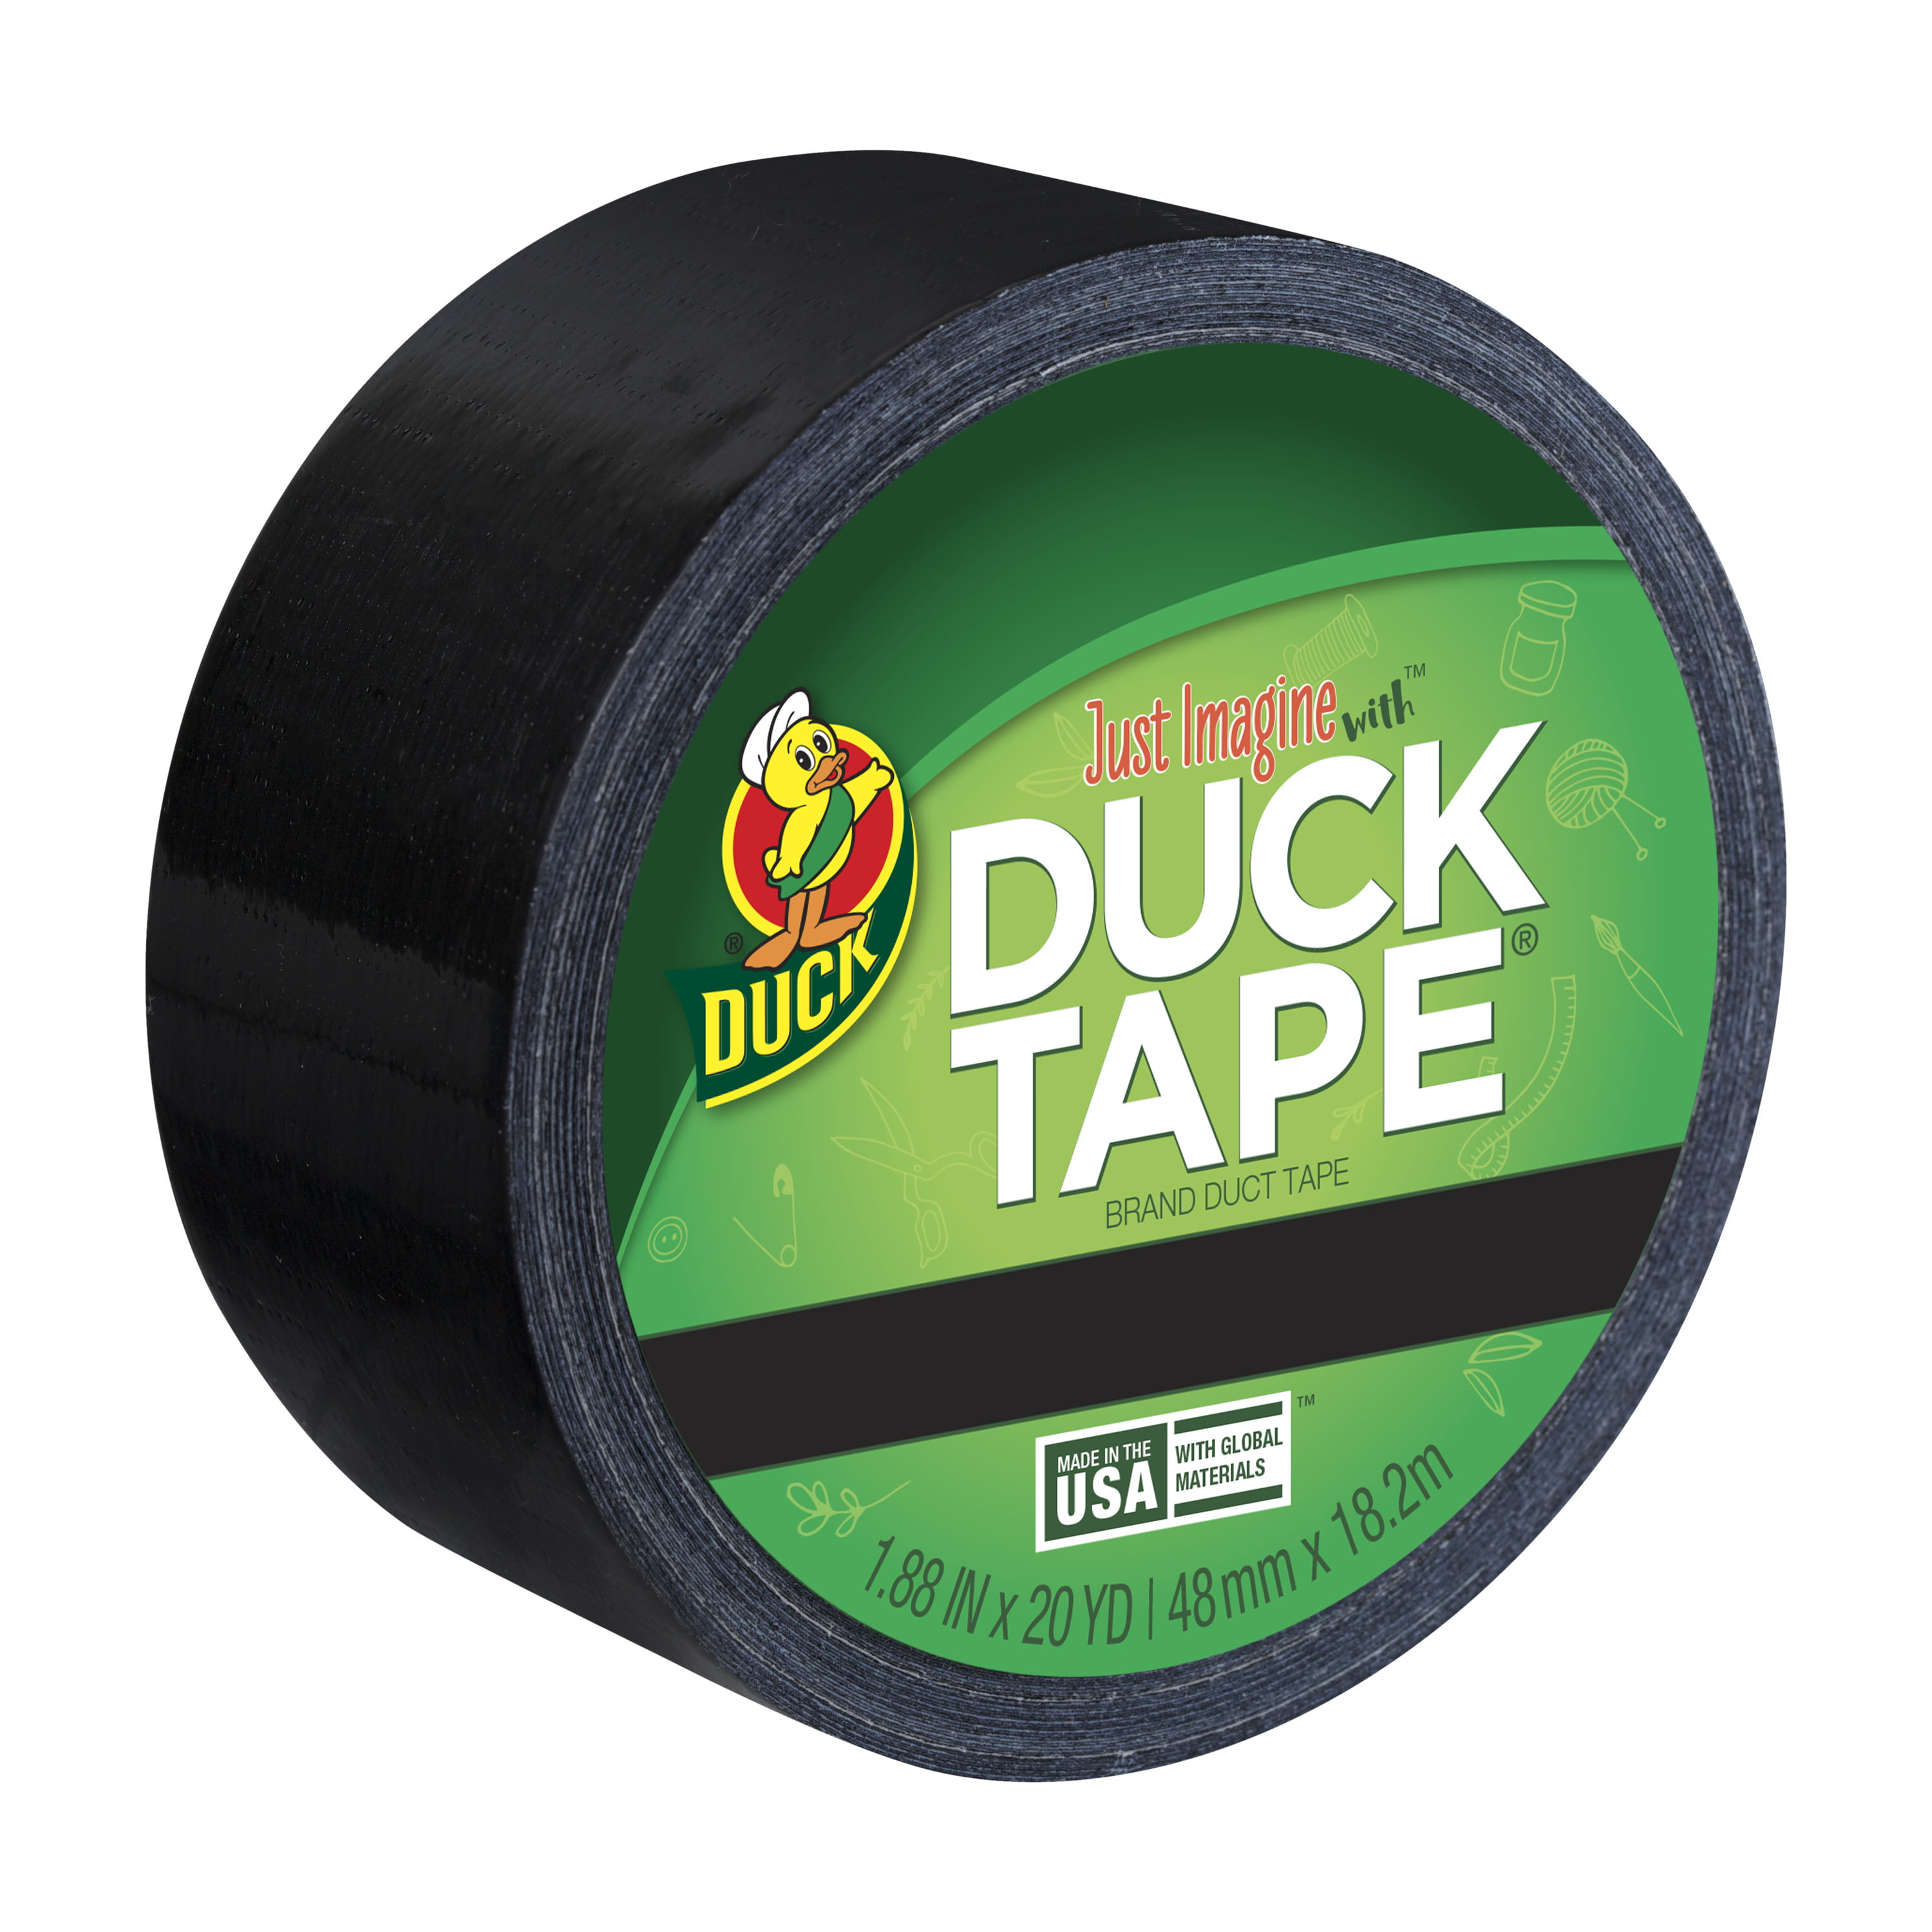 Duck Brand Duct Tape, Black